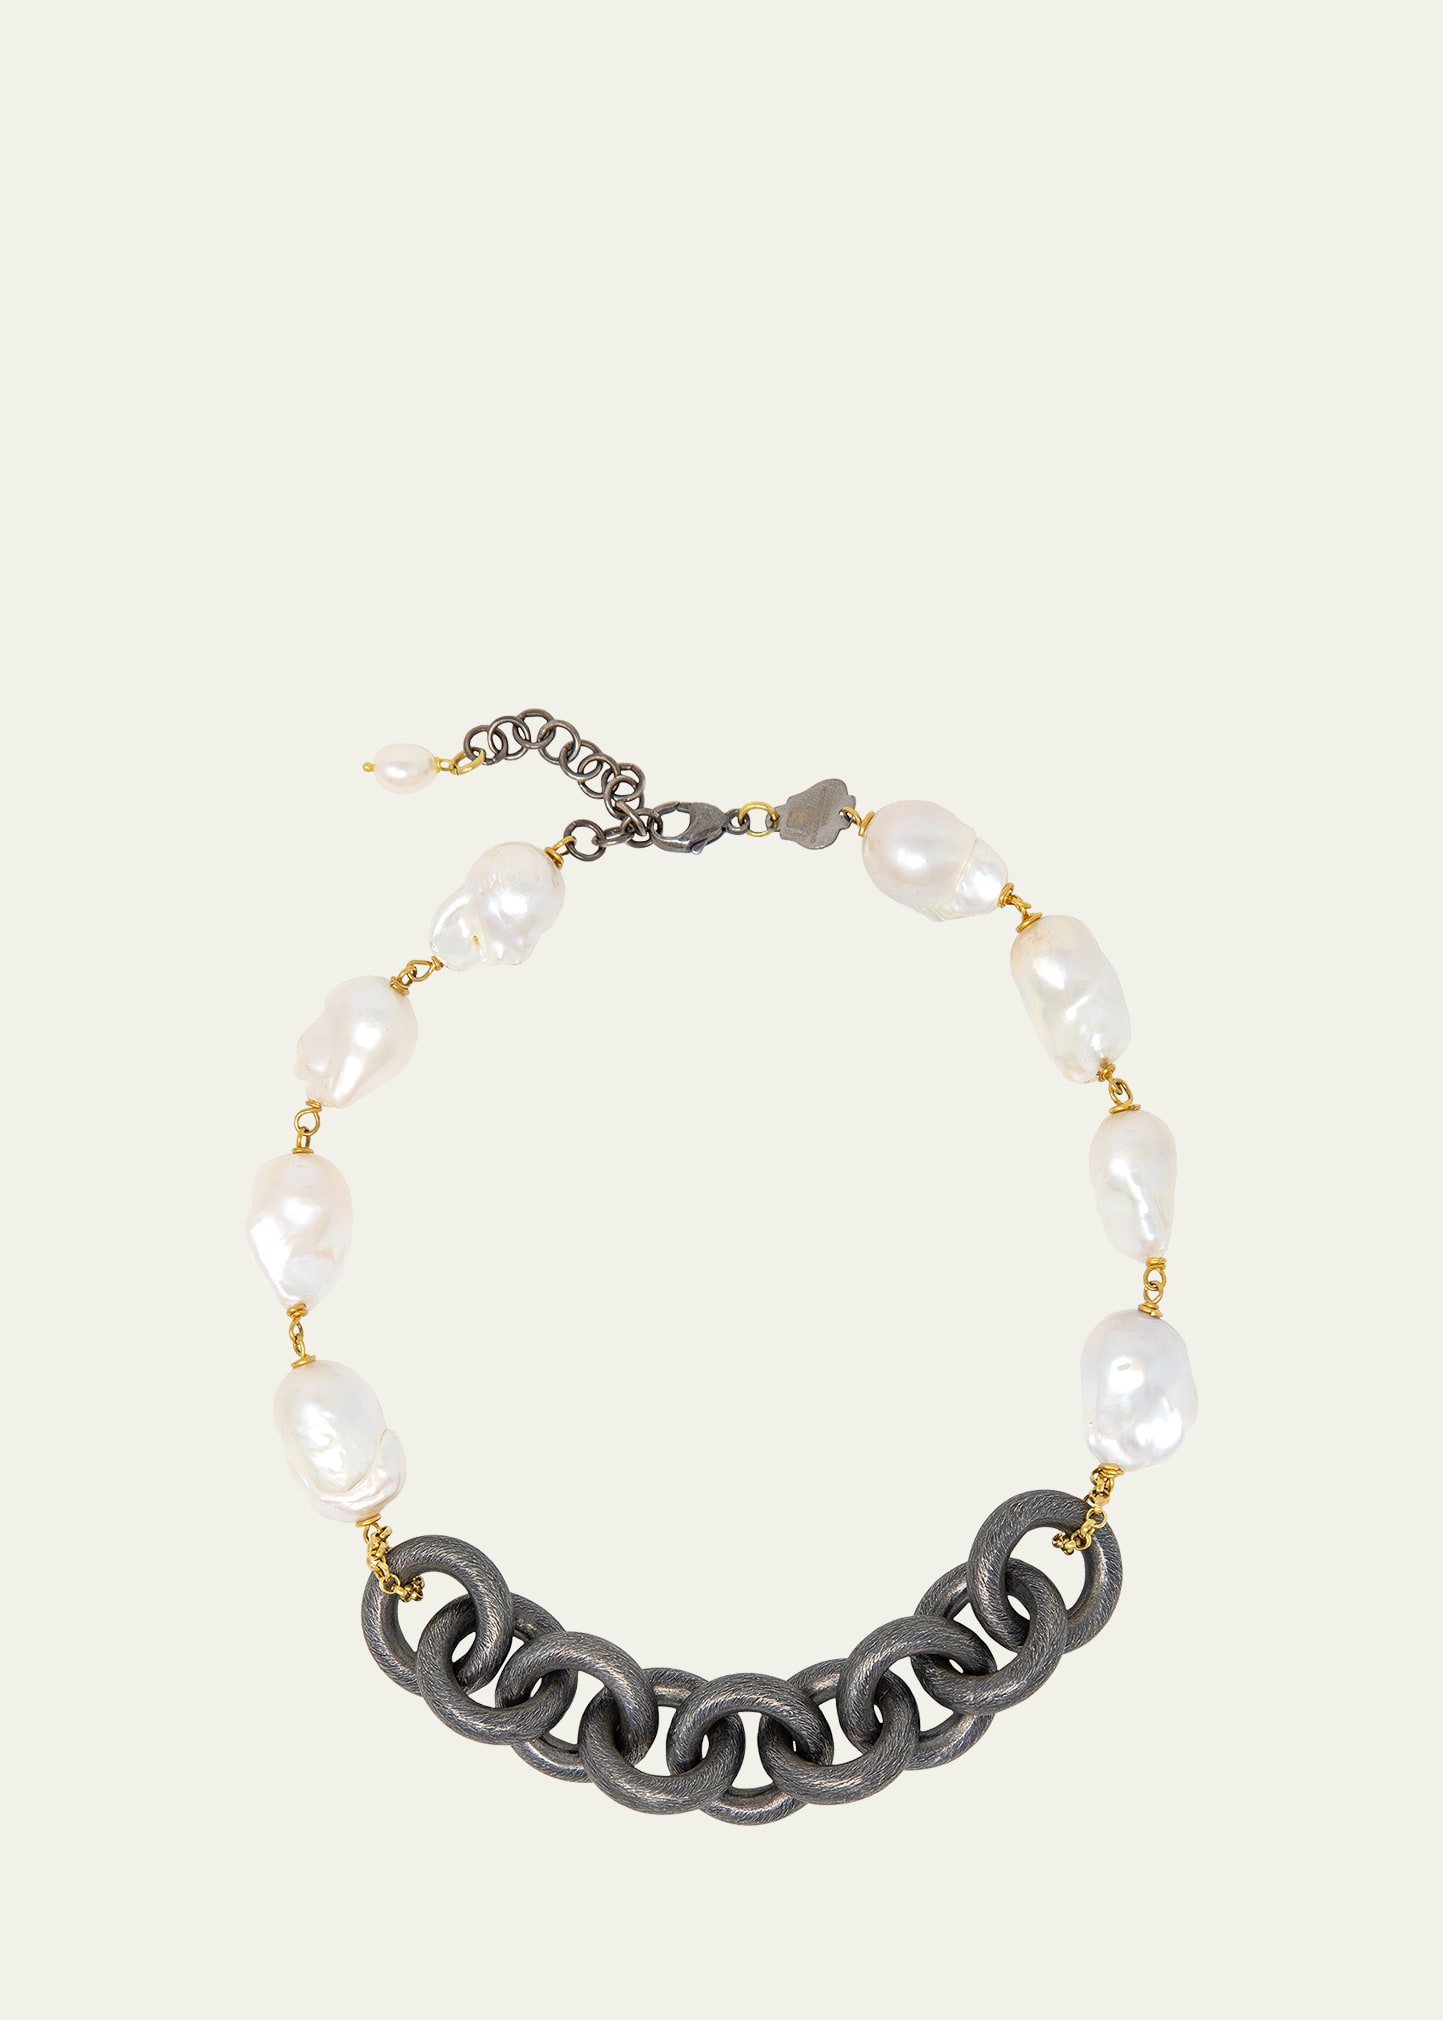 Grazia And Marica Vozza Rosary Necklace With Pearls And Black Silver Chain